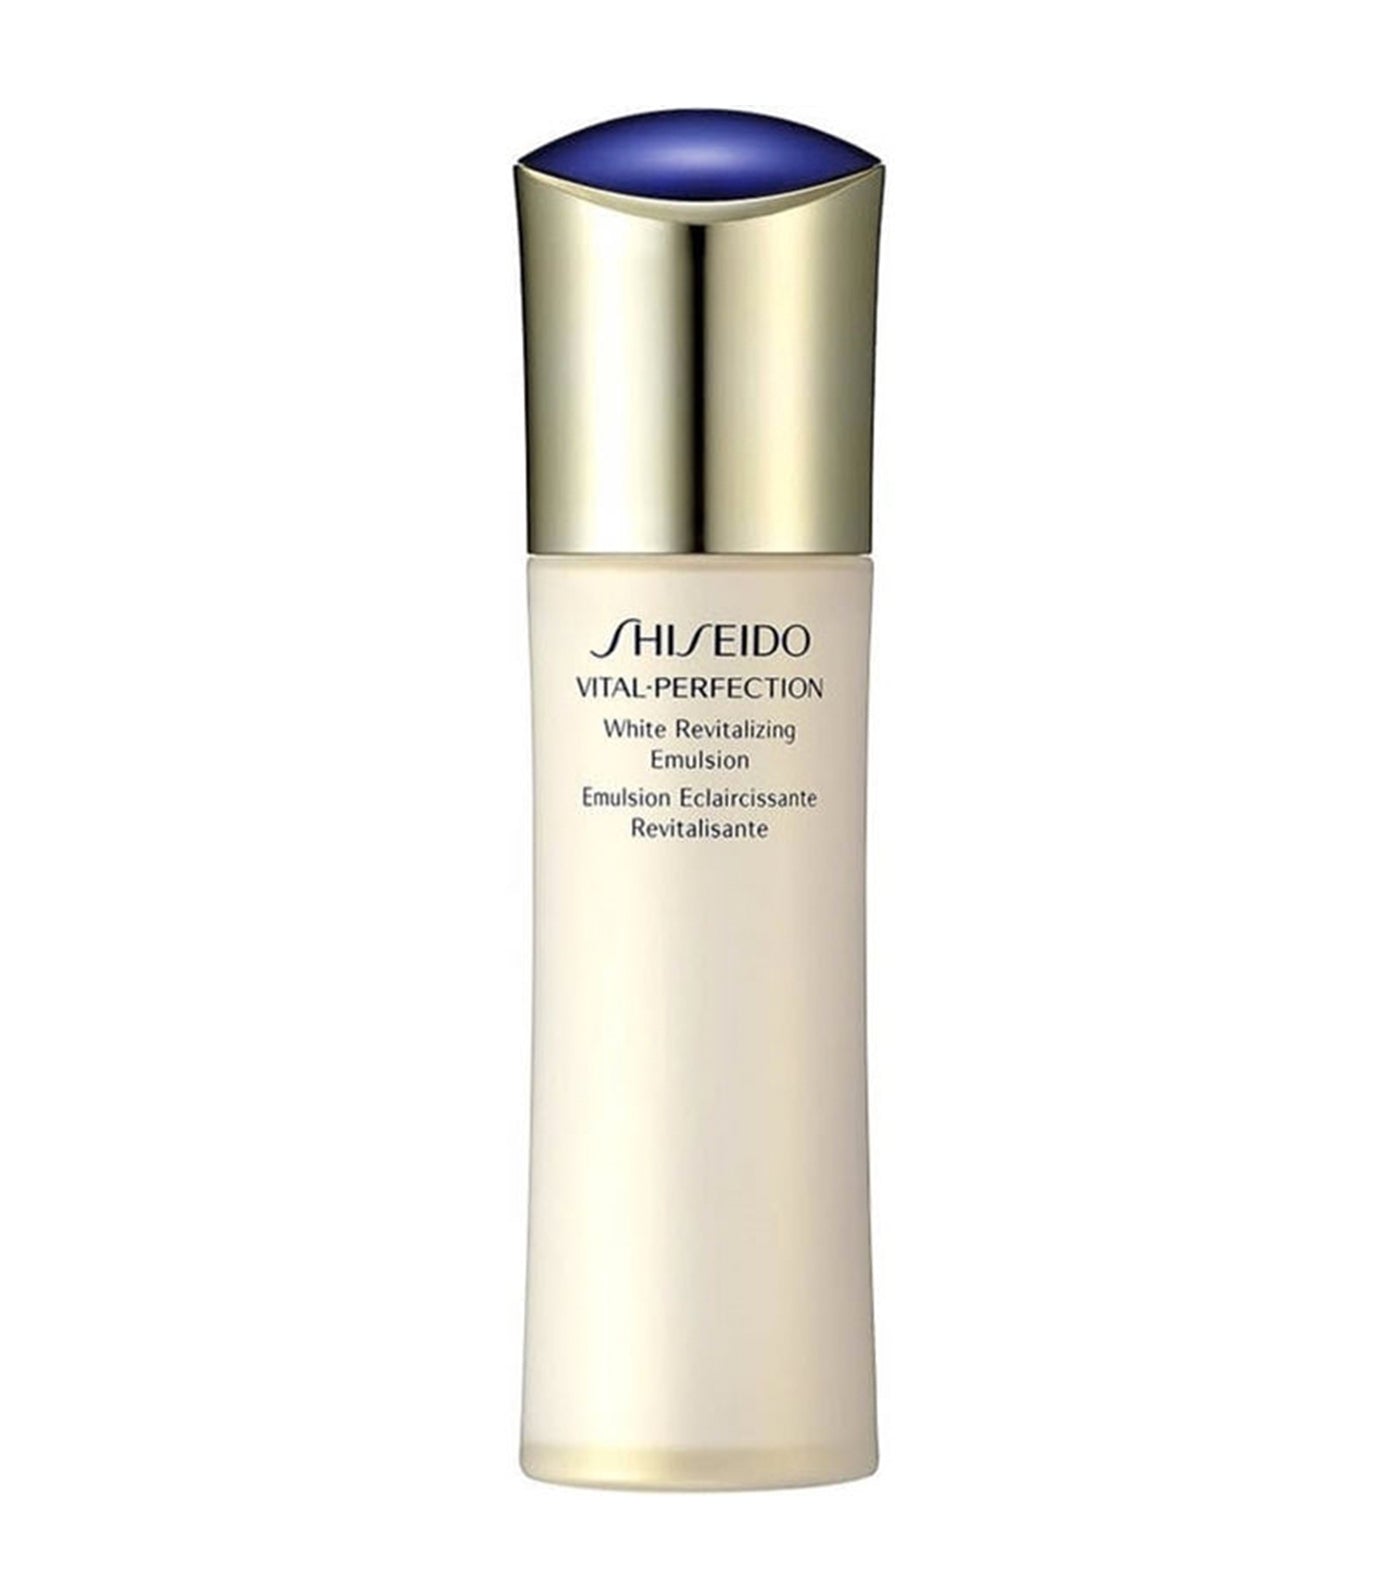 Shiseido Vital Perfection White Revitalizing Emulsion